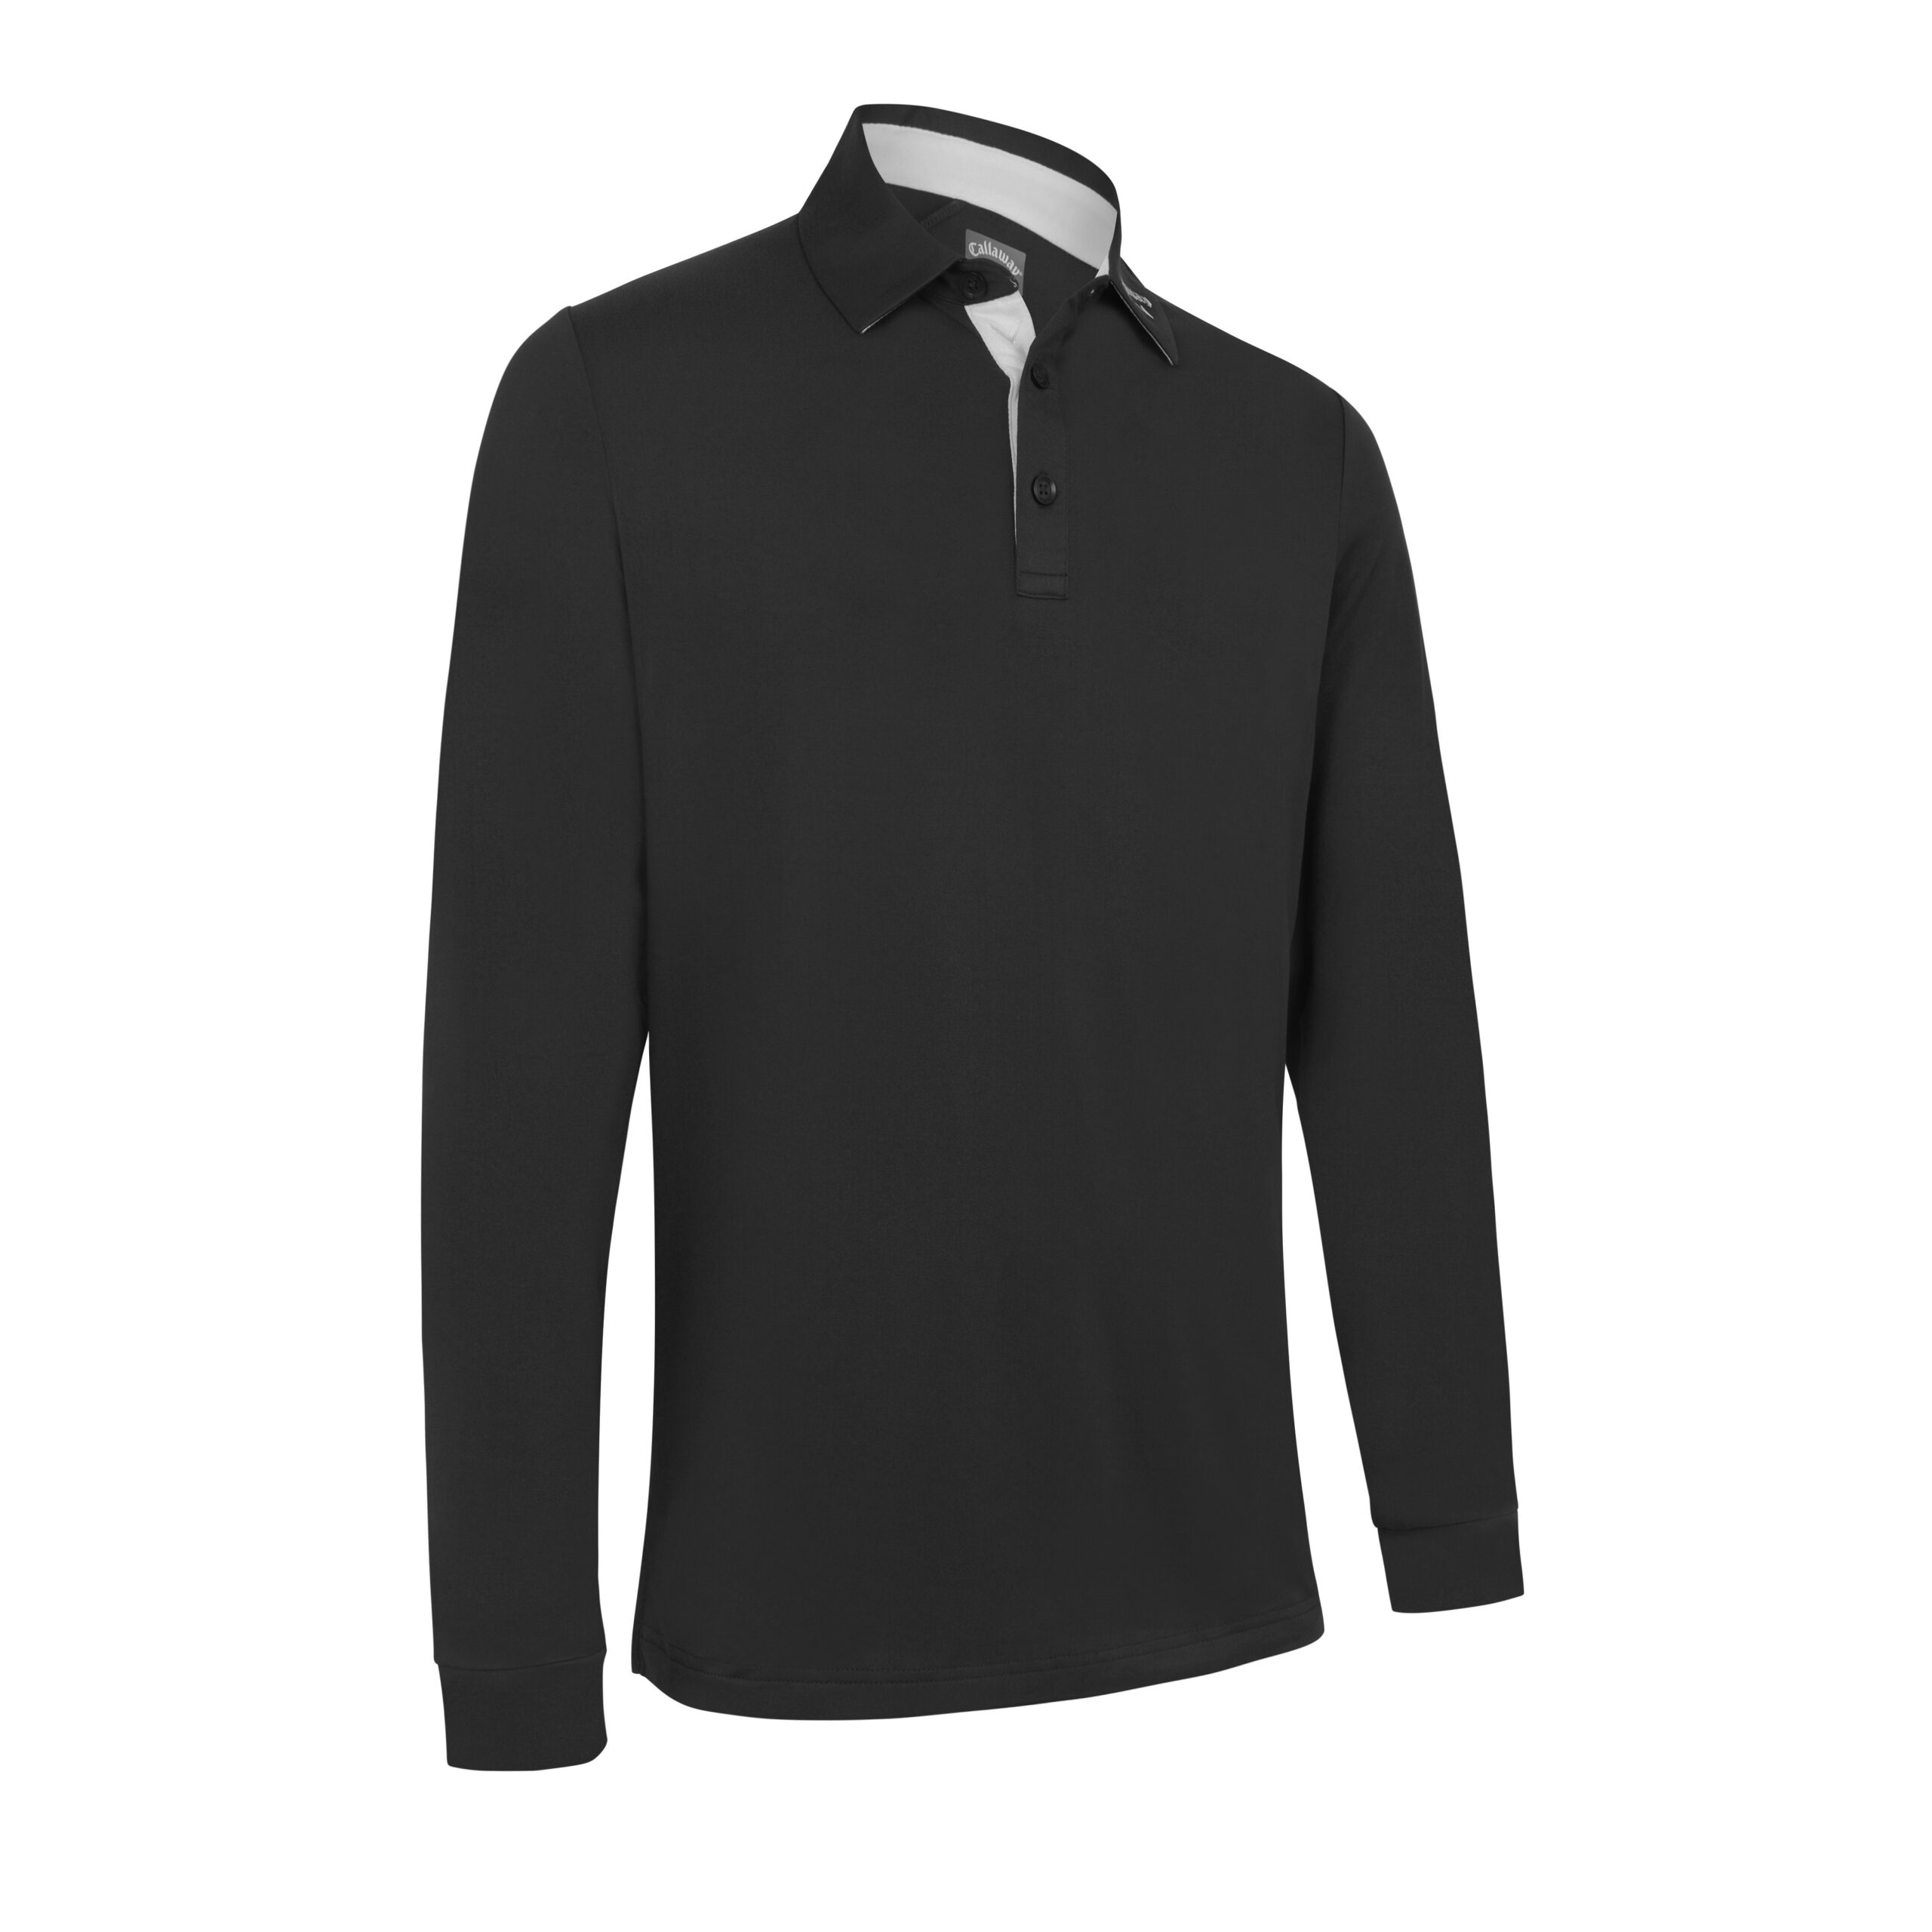 Callaway Performance pánské golfové triko s dlouhým rukávem, černé, vel. L